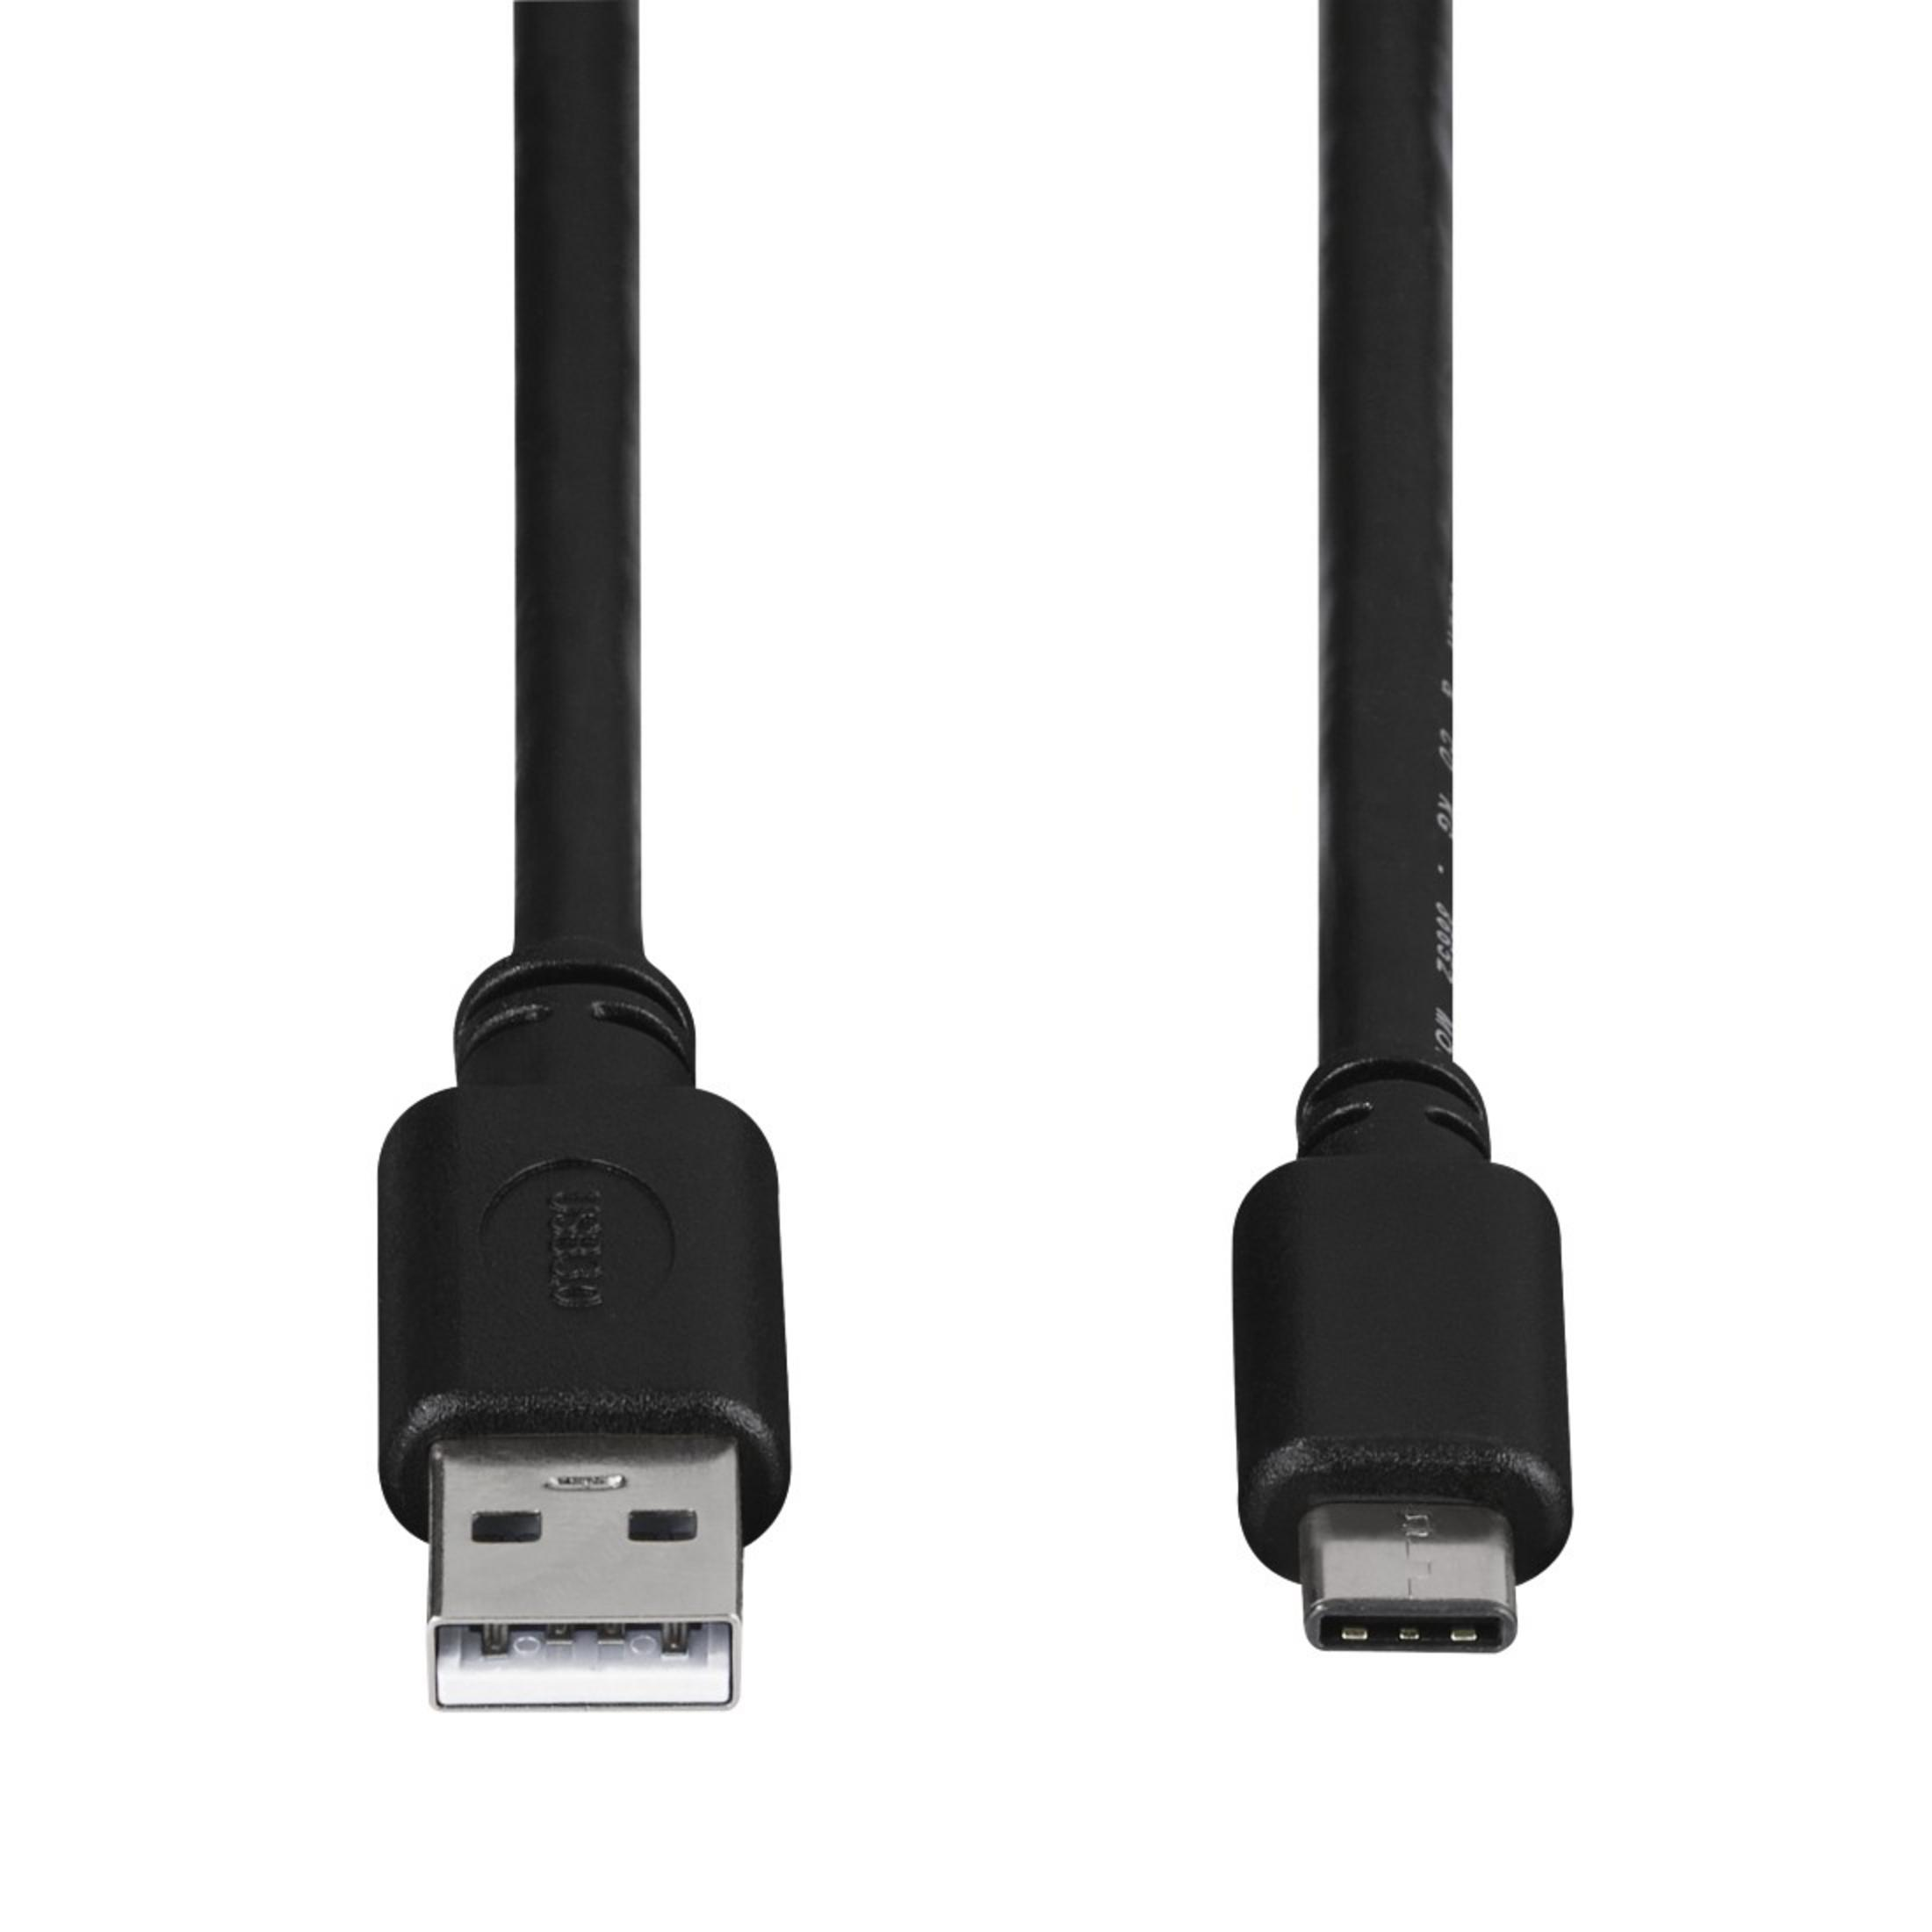 HAMA 135741 USB-C 1,80M KABEL - Schwarz 2.0 A USB-C-Kabel